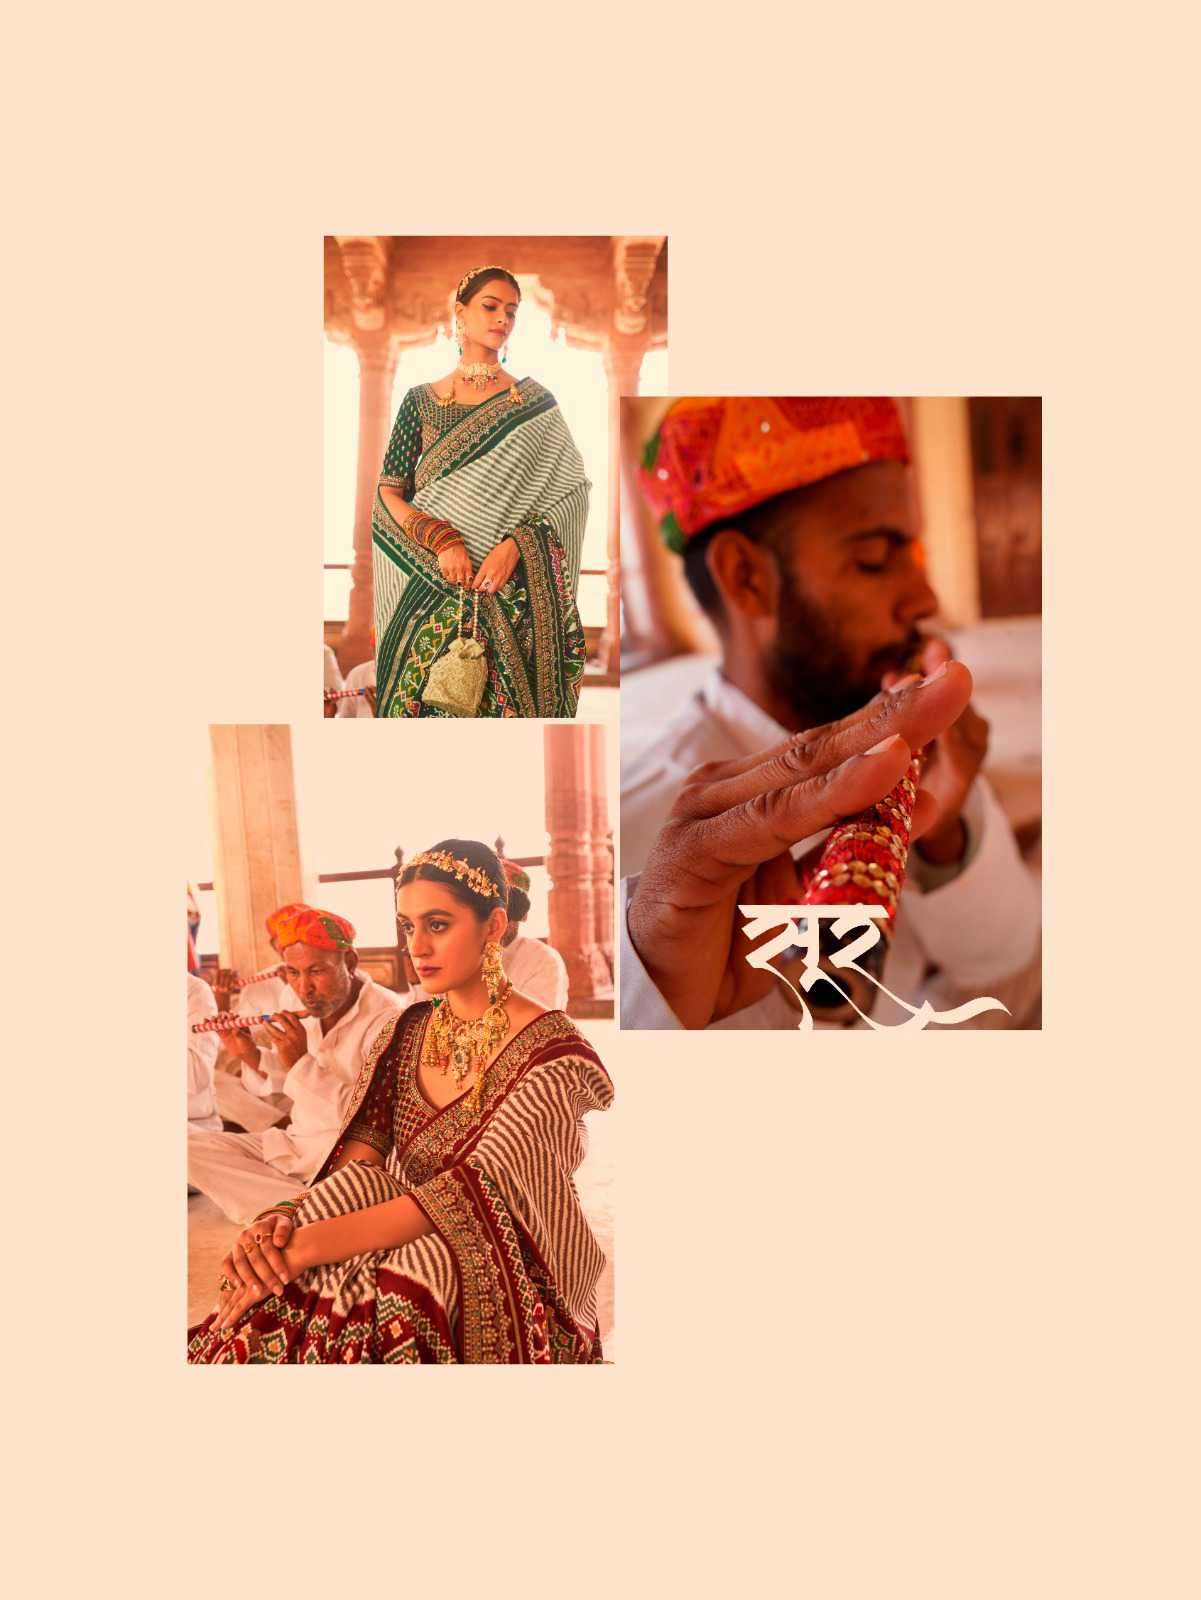 Rewaa Sur Silk 108 Colors Wedding Wear Designer Patola Saree New Collection